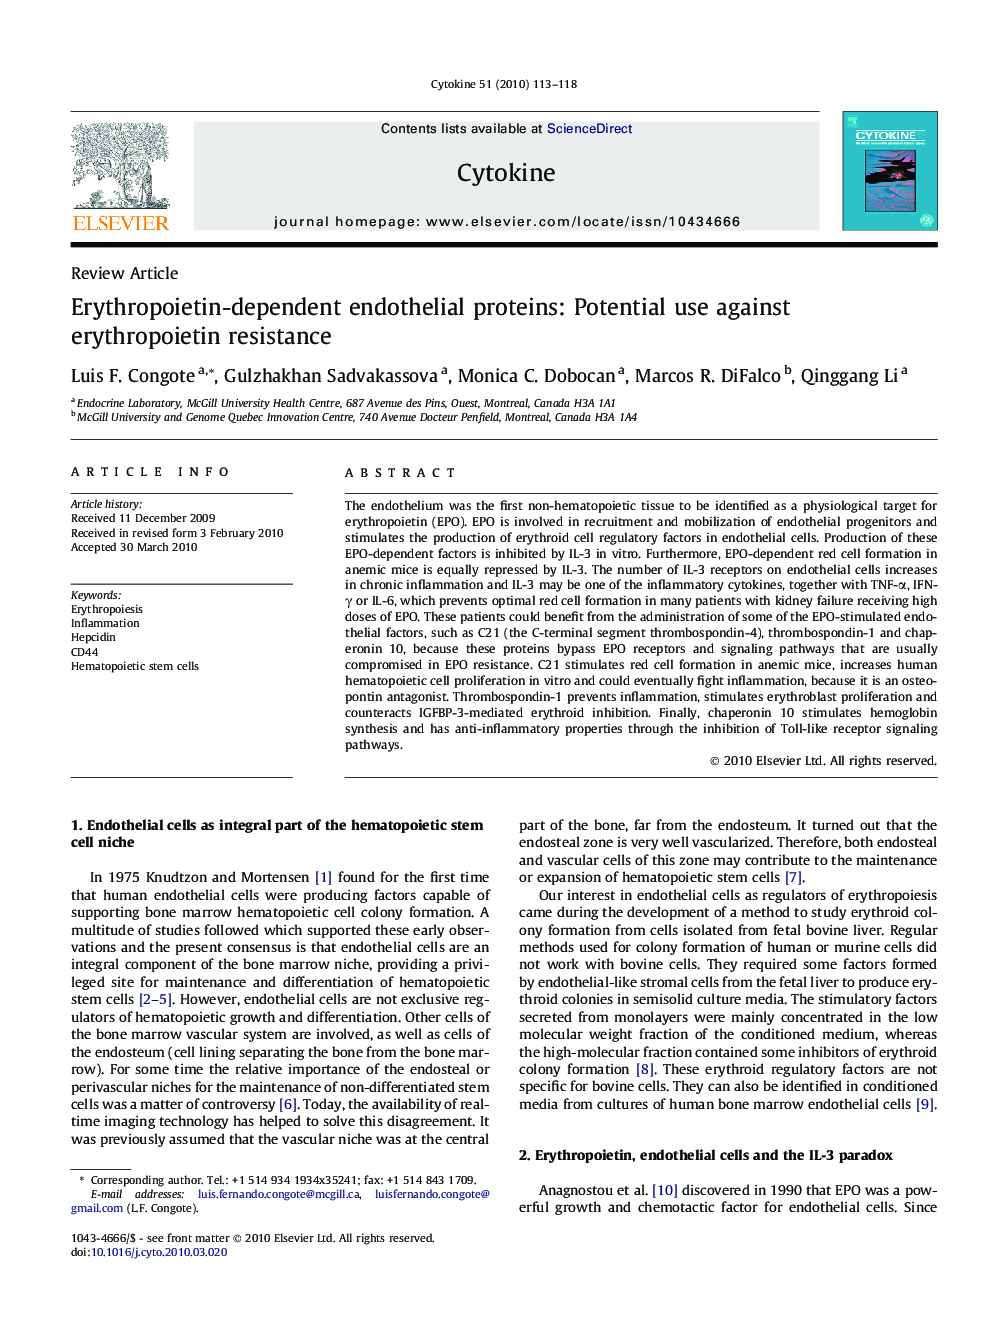 Erythropoietin-dependent endothelial proteins: Potential use against erythropoietin resistance